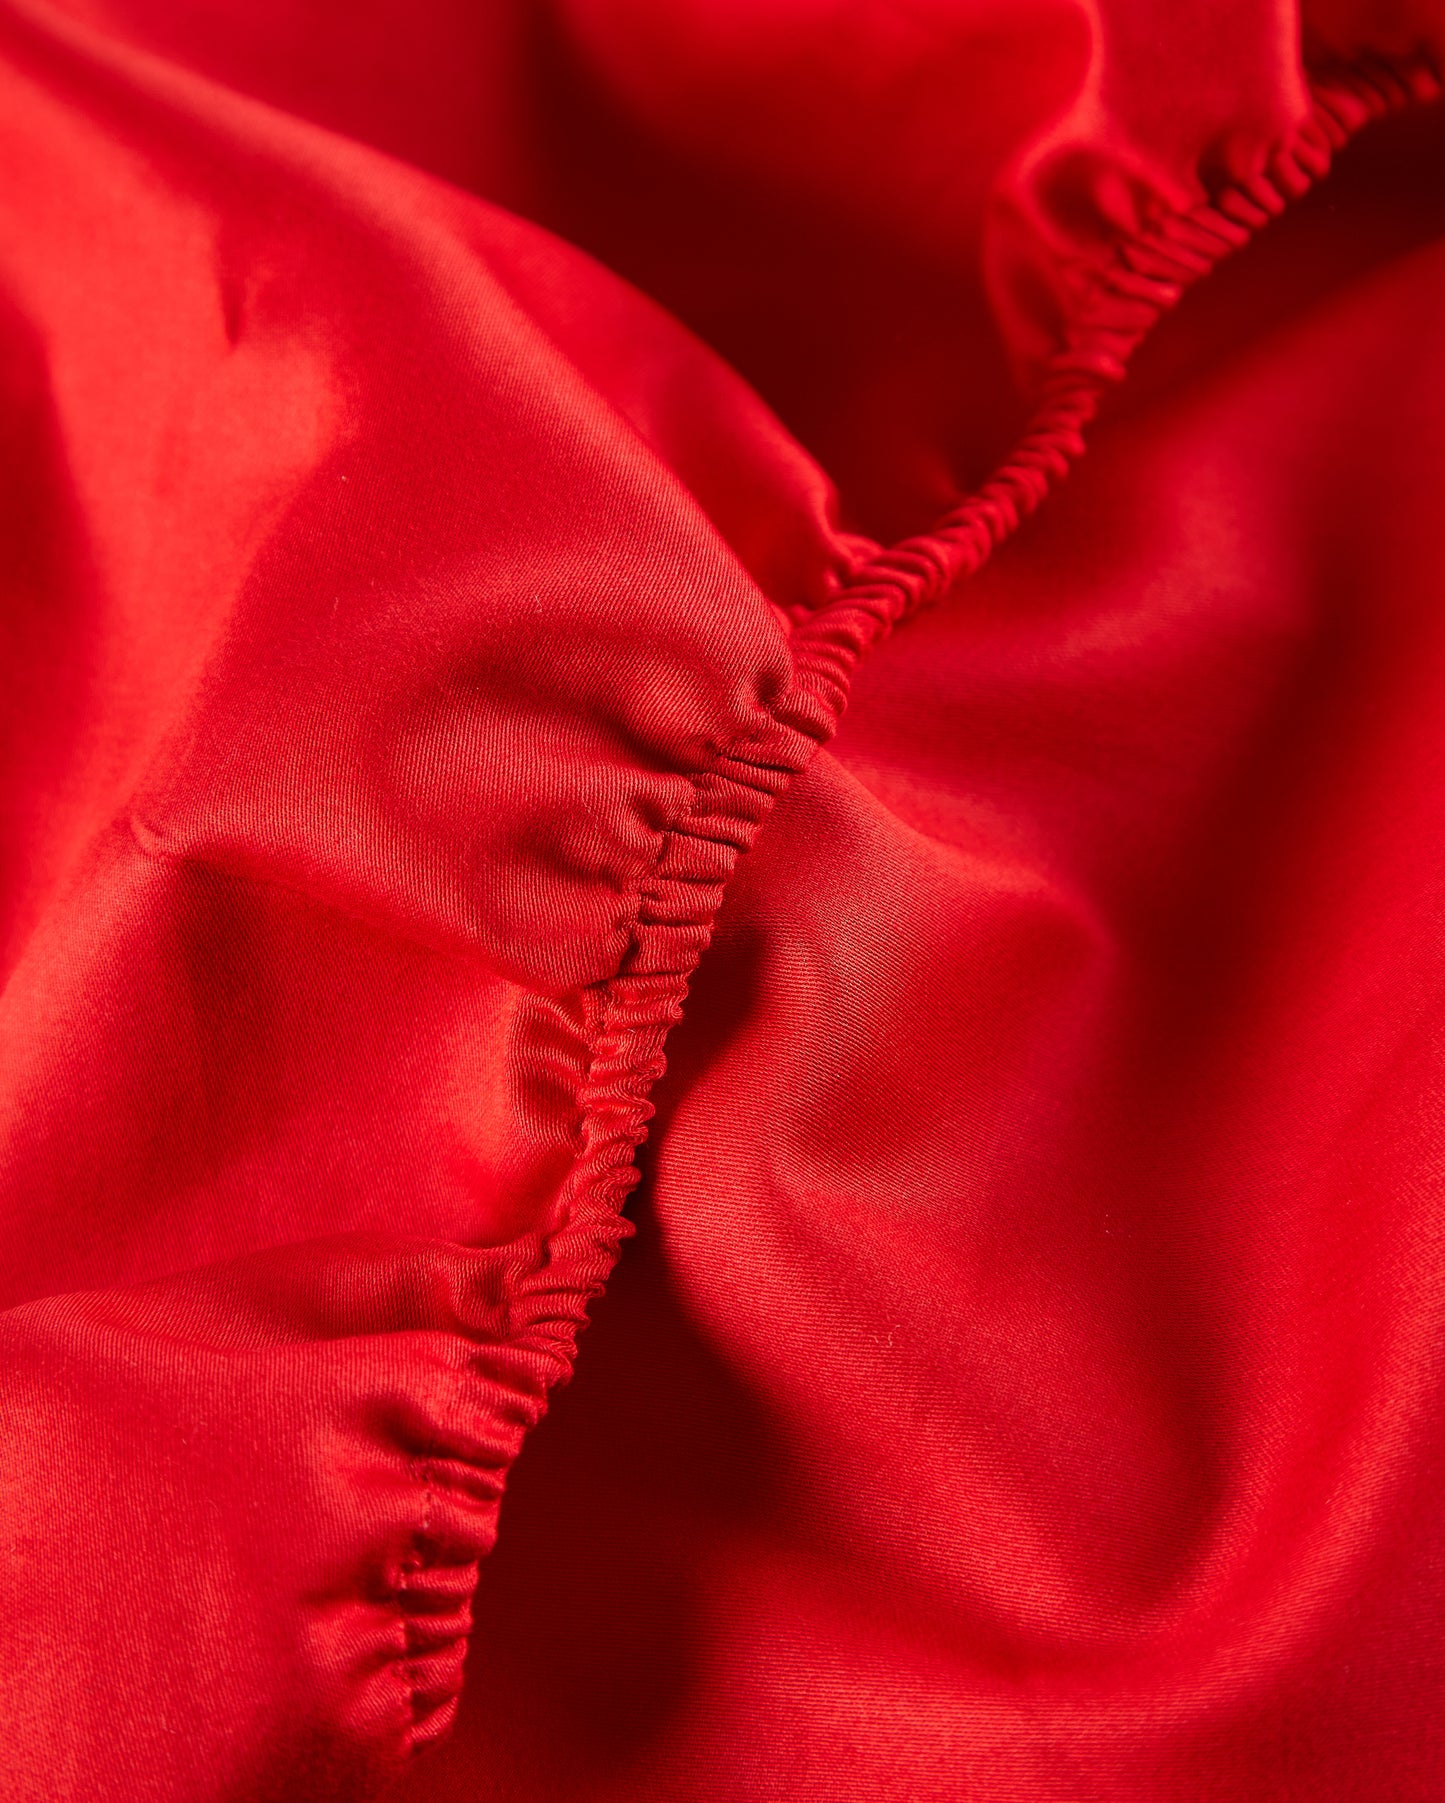 Reversible Sateen Bedding Set - Fuchsia & Red